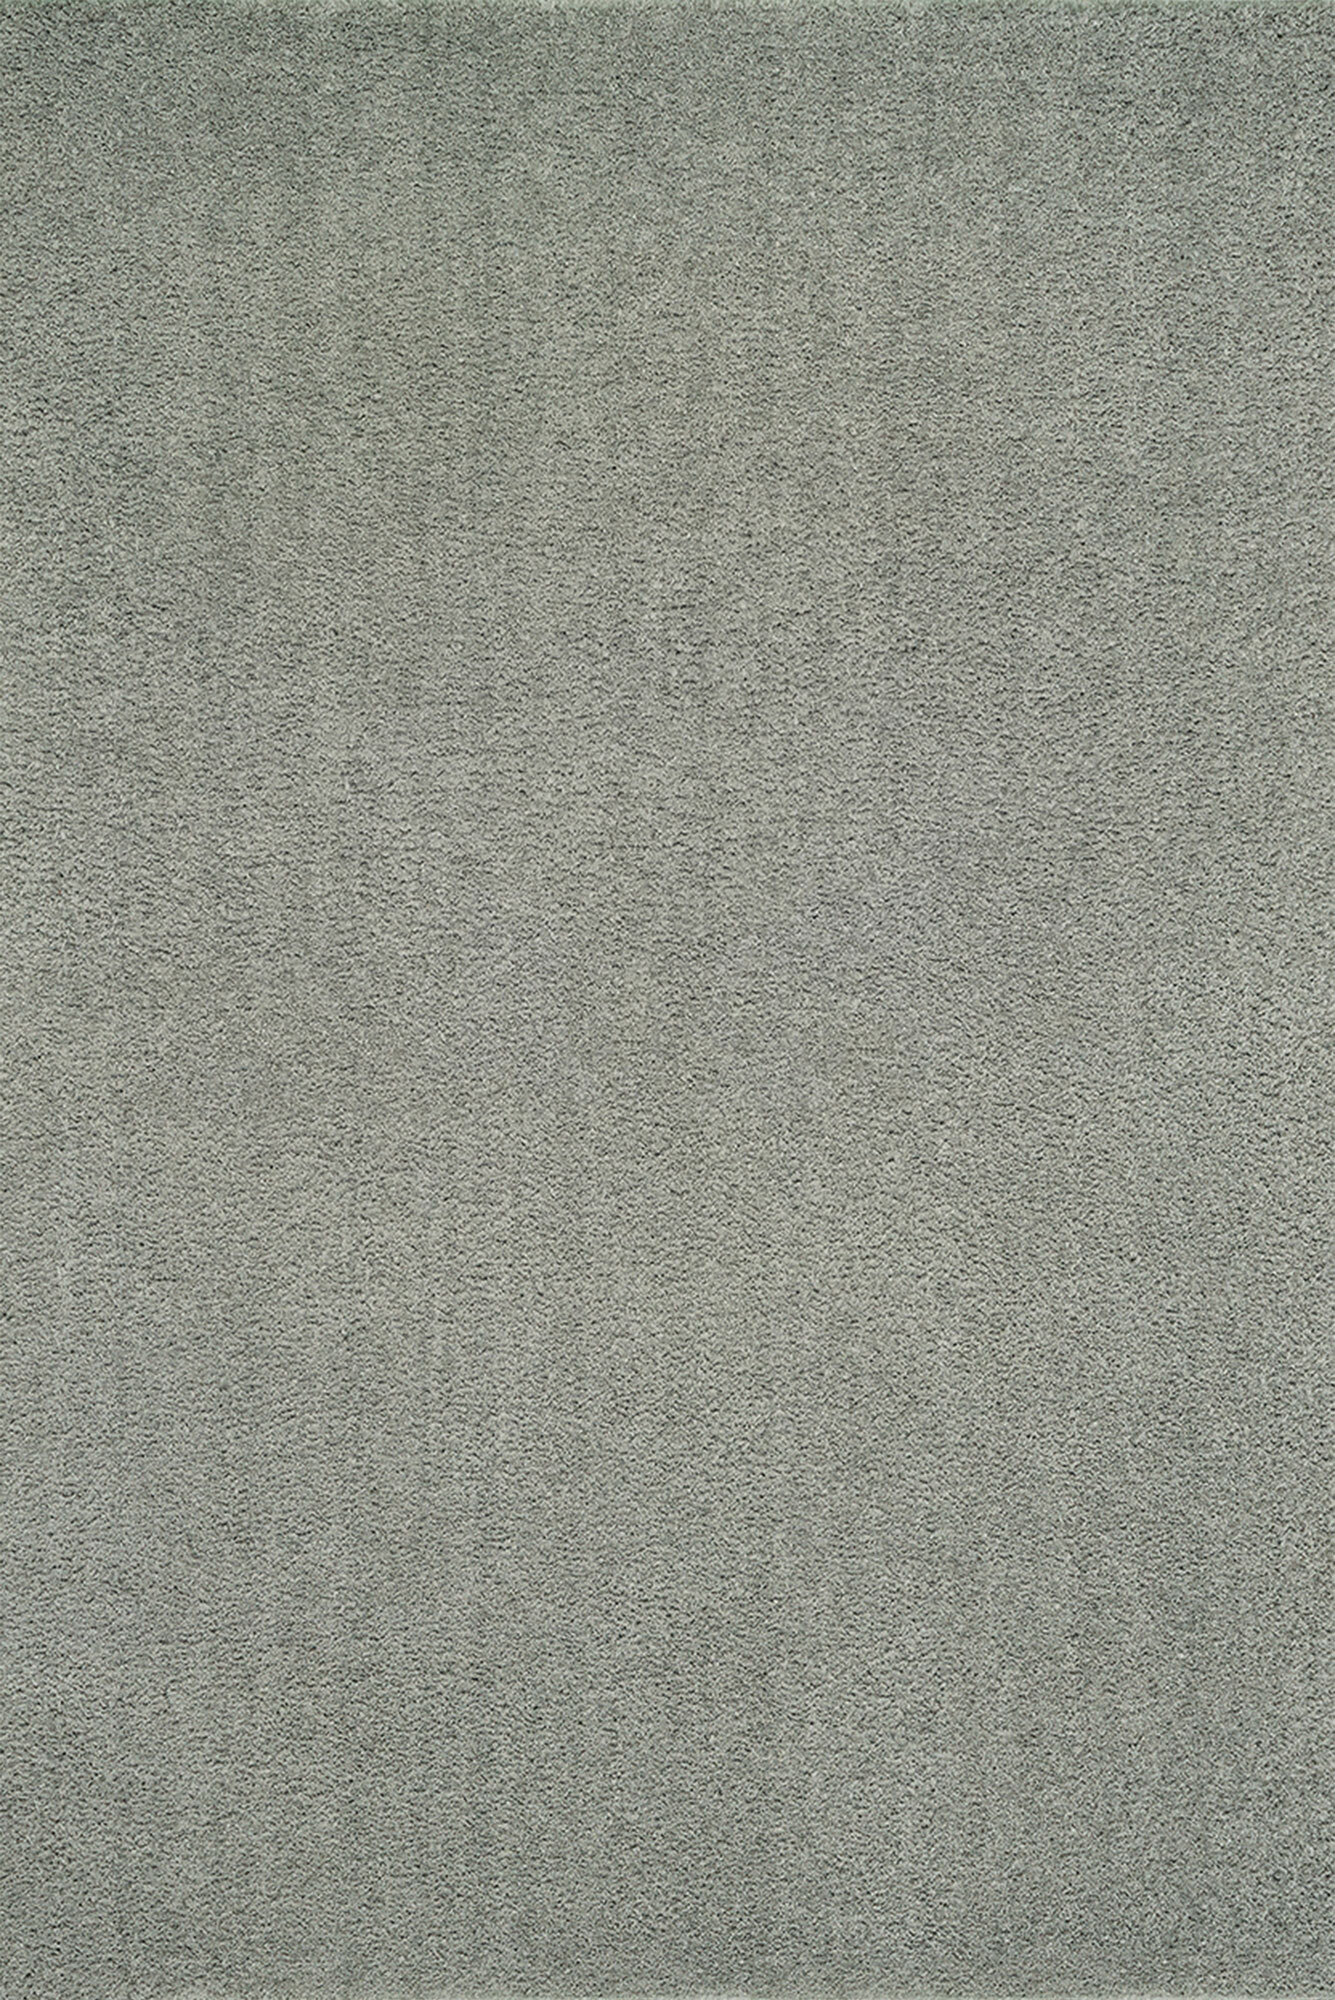 Sofia Modern Plain Grey Rug